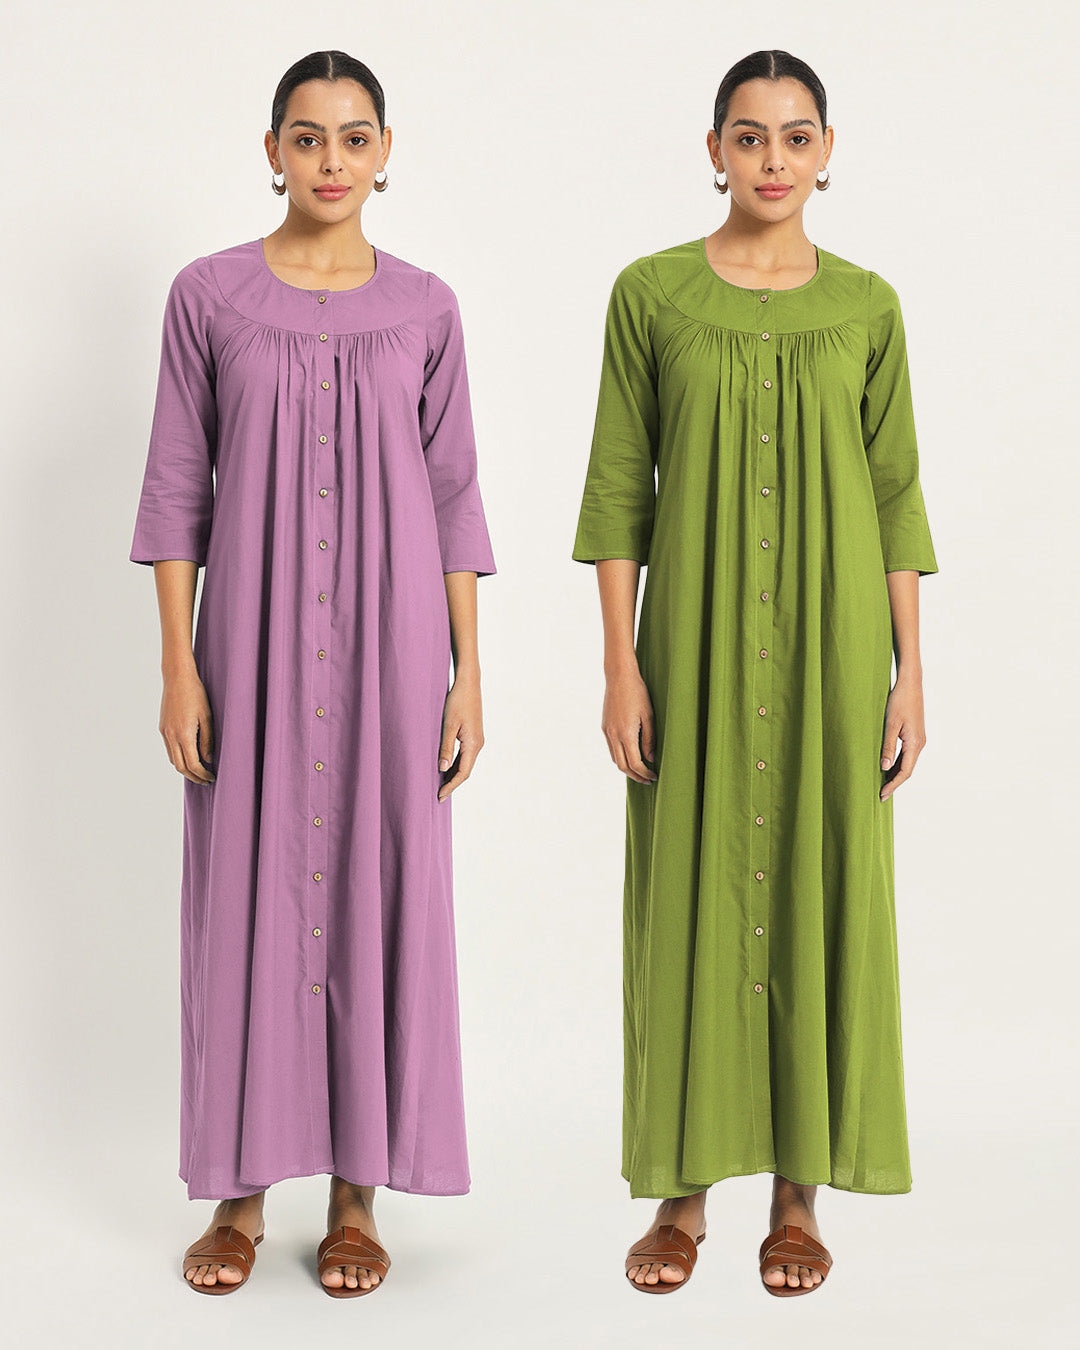 Combo: Iris Pink & Sage Green Nighttime Must-Have Nightdress